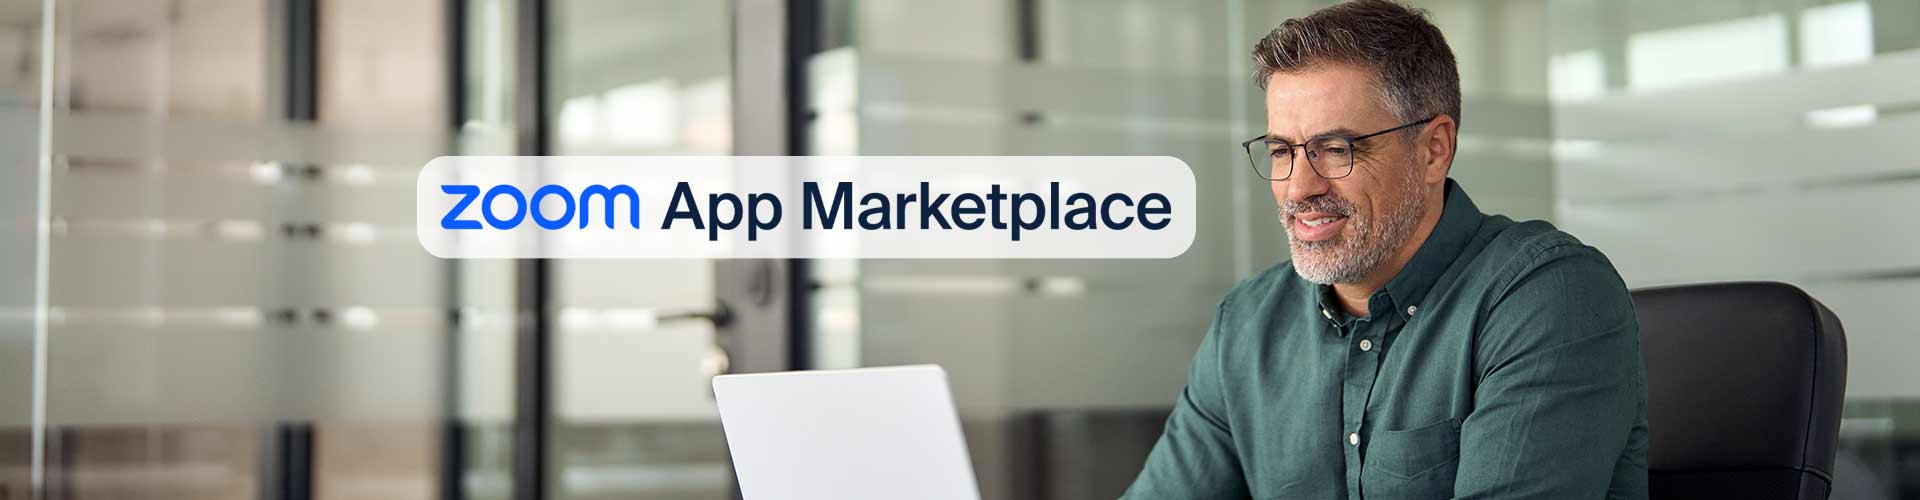 Mi-Voice ZOOM Marketplace App